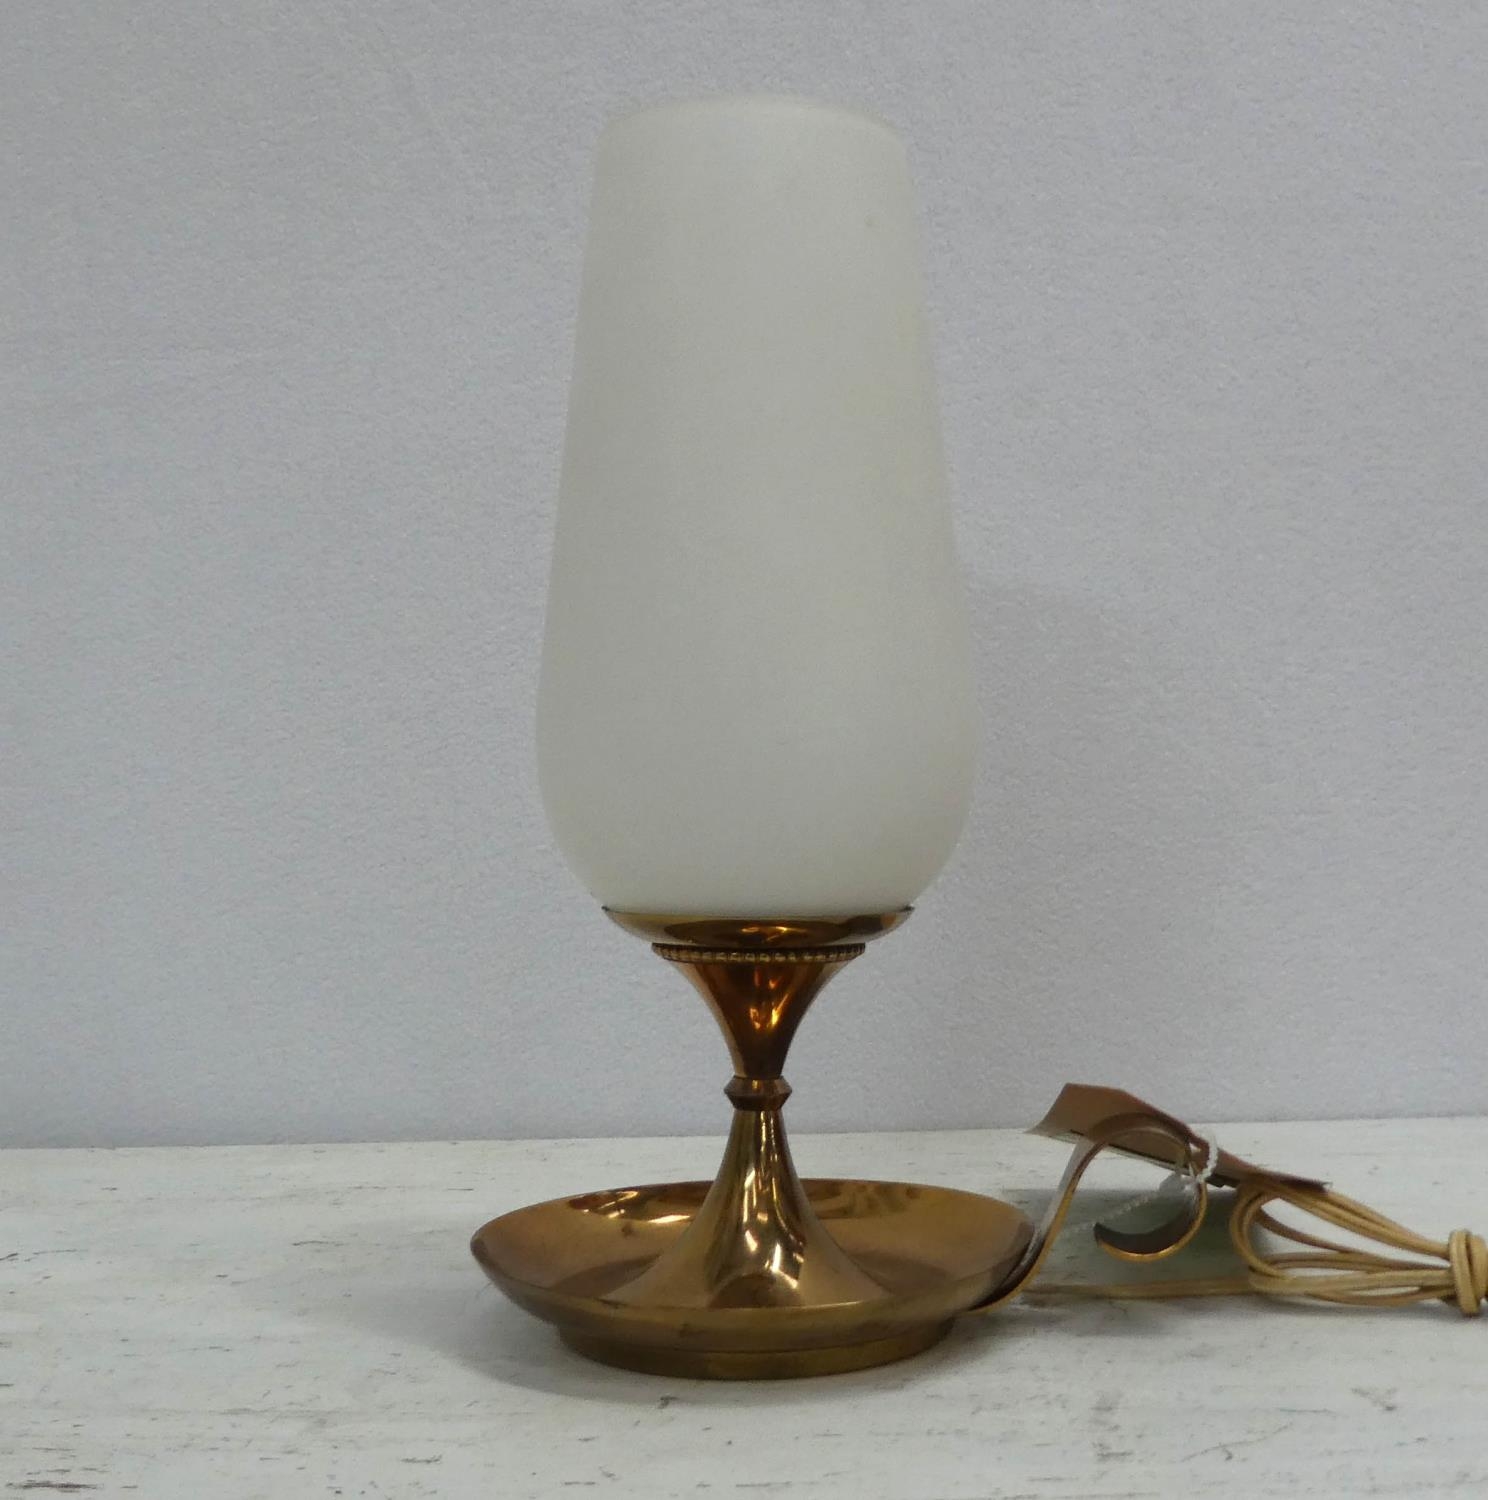 STILNOVO TABLE LAMP, 29cm H approx., vintage 1950's Italian.